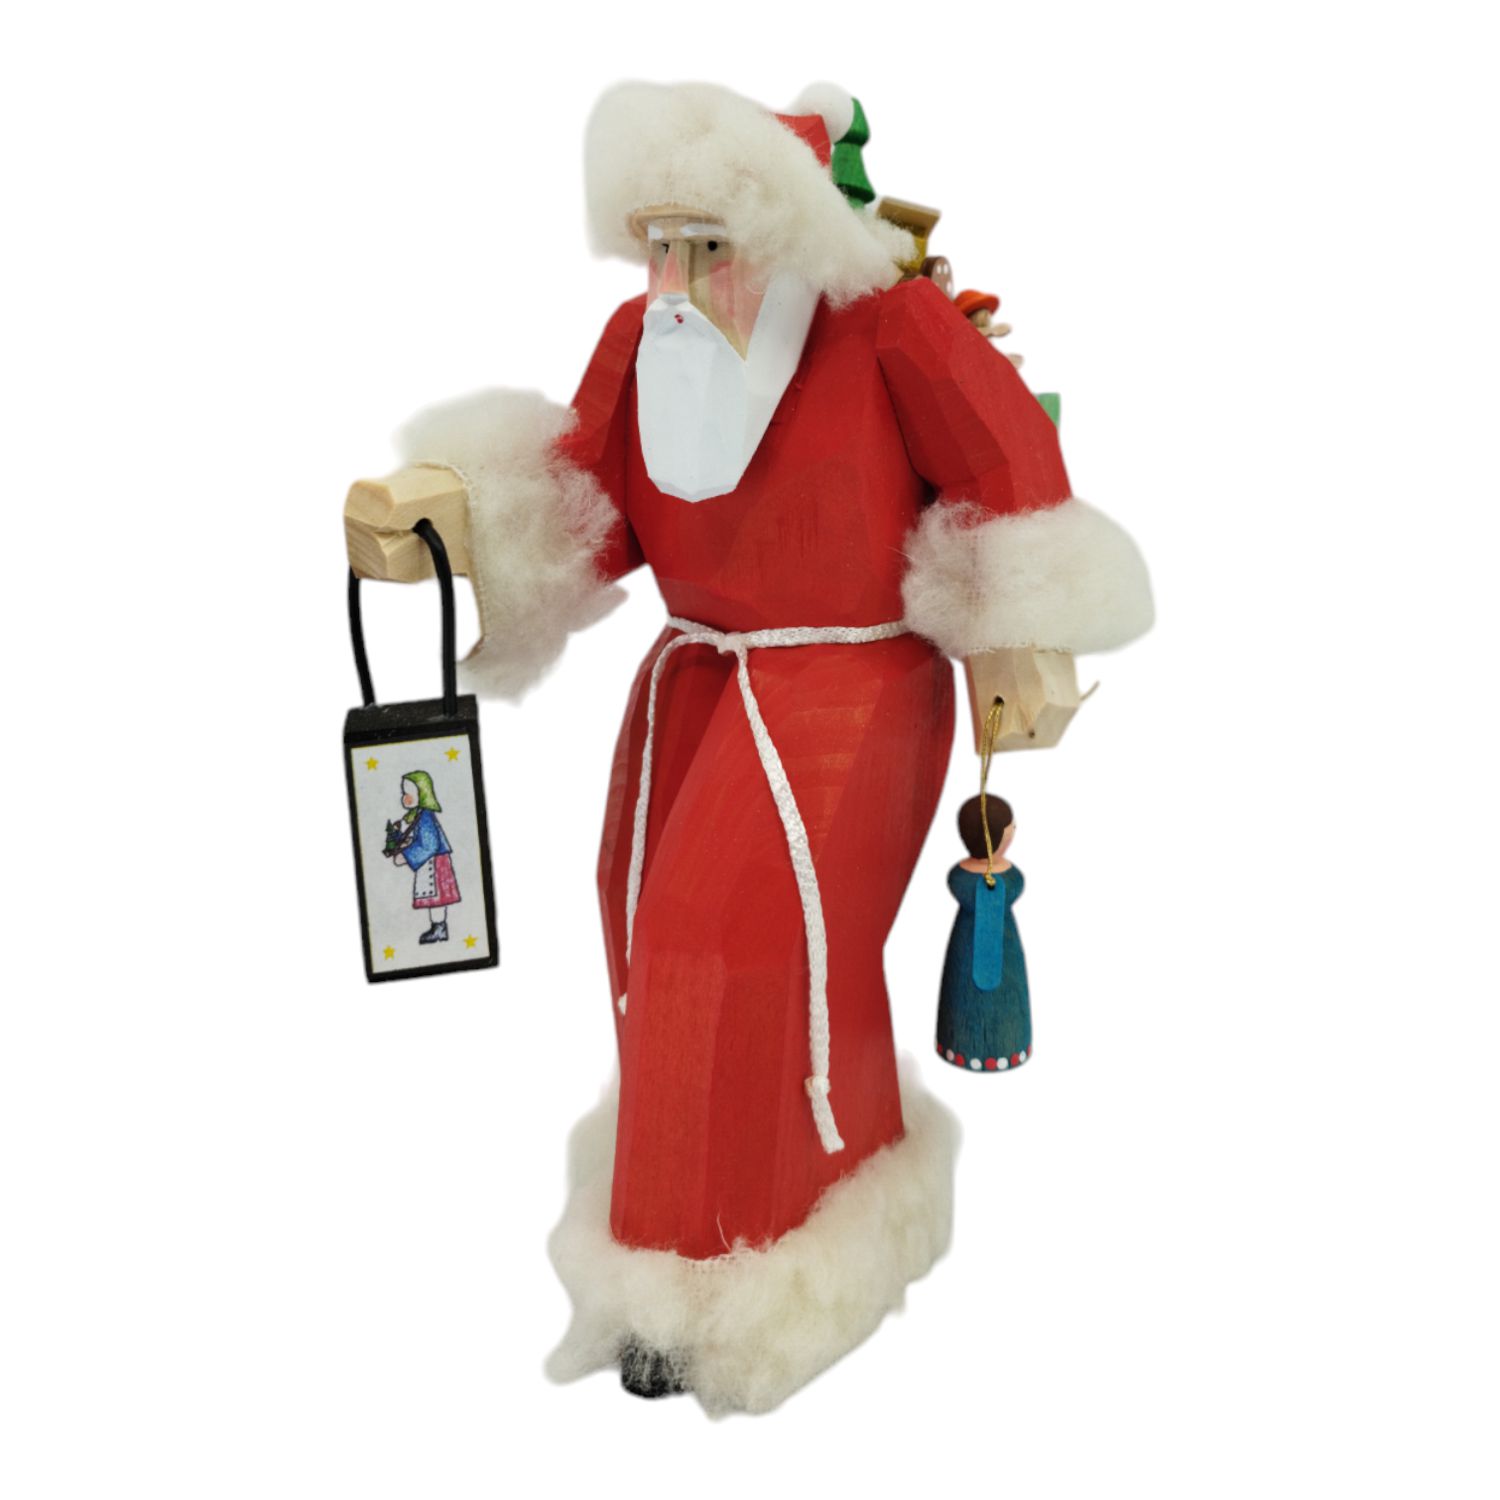 Santa Claus with fur